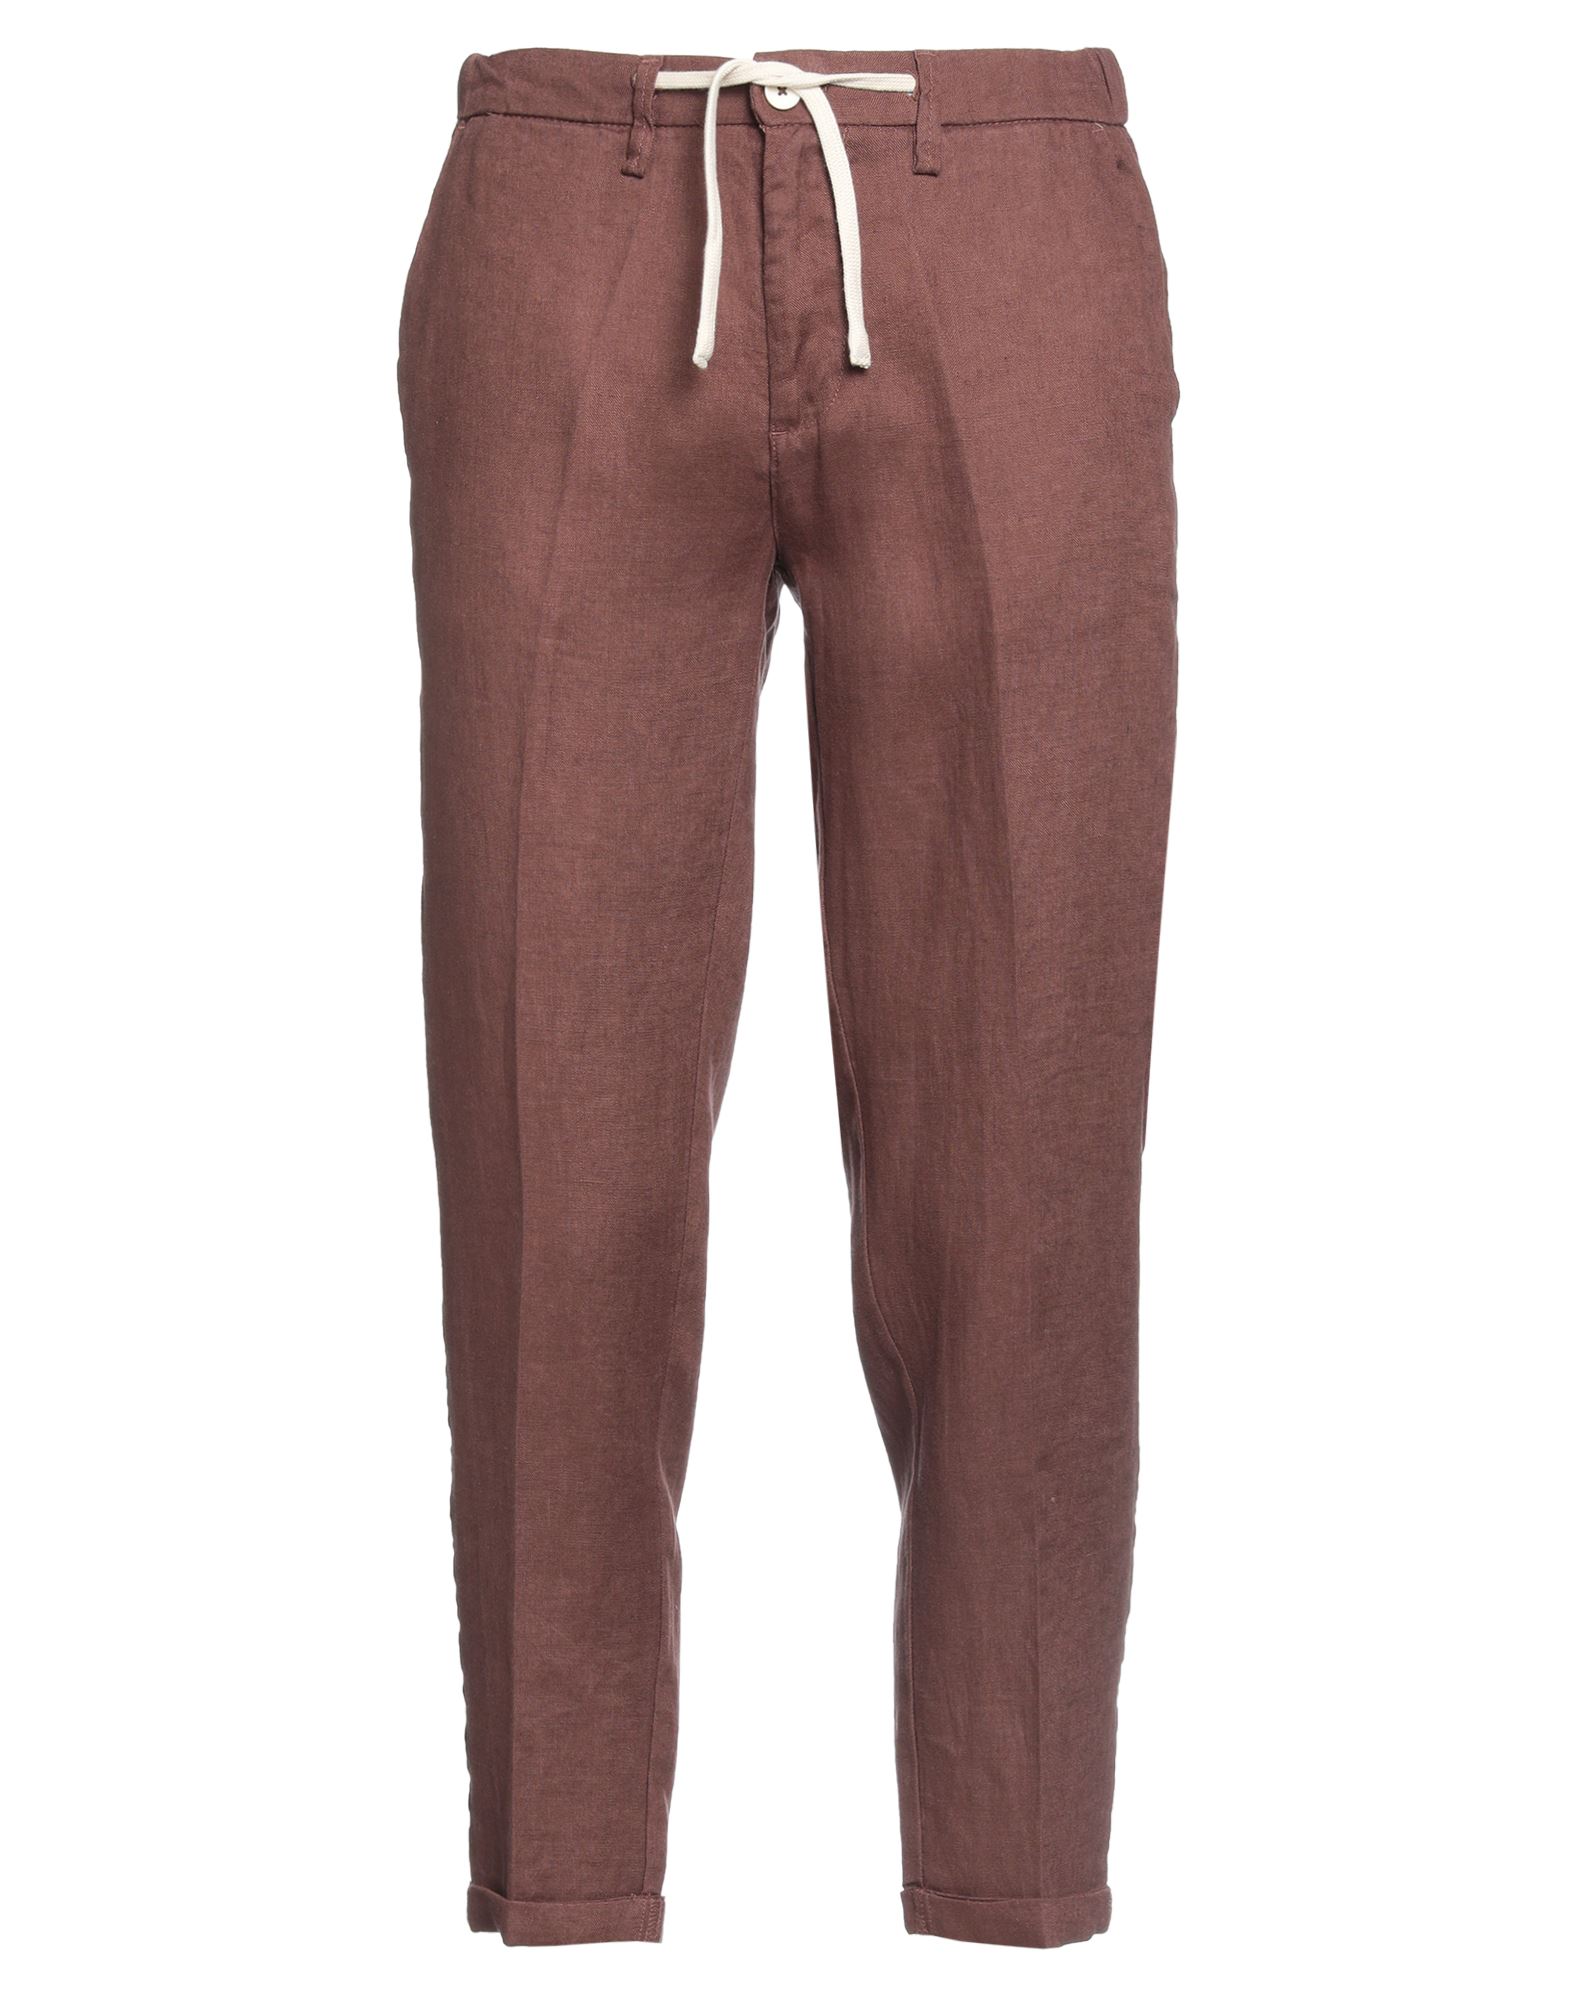 Gazzarrini Pants In Brown